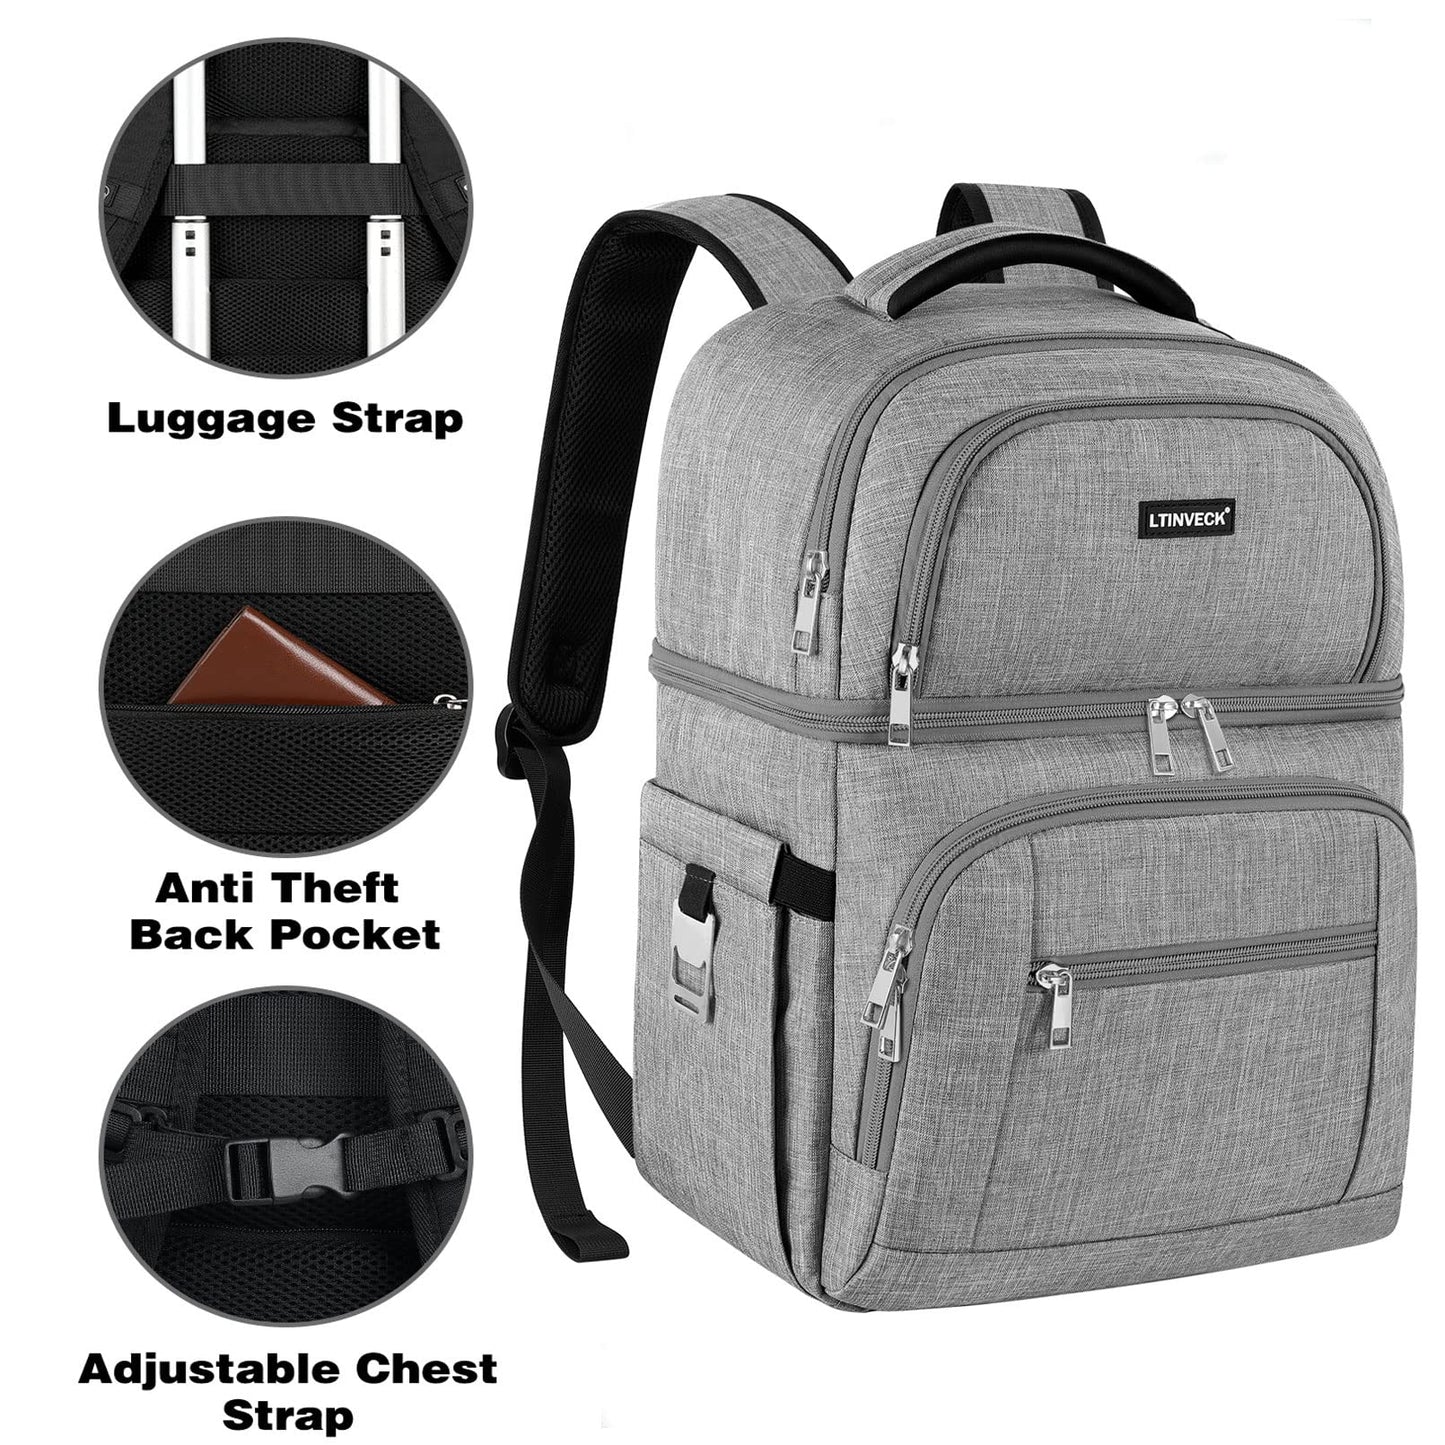 Cooler Backpack,30 Cans Insulated Backpack Cooler Leakproof Double Deck Cooler Bag for Men Women RFID Lunch Backpack